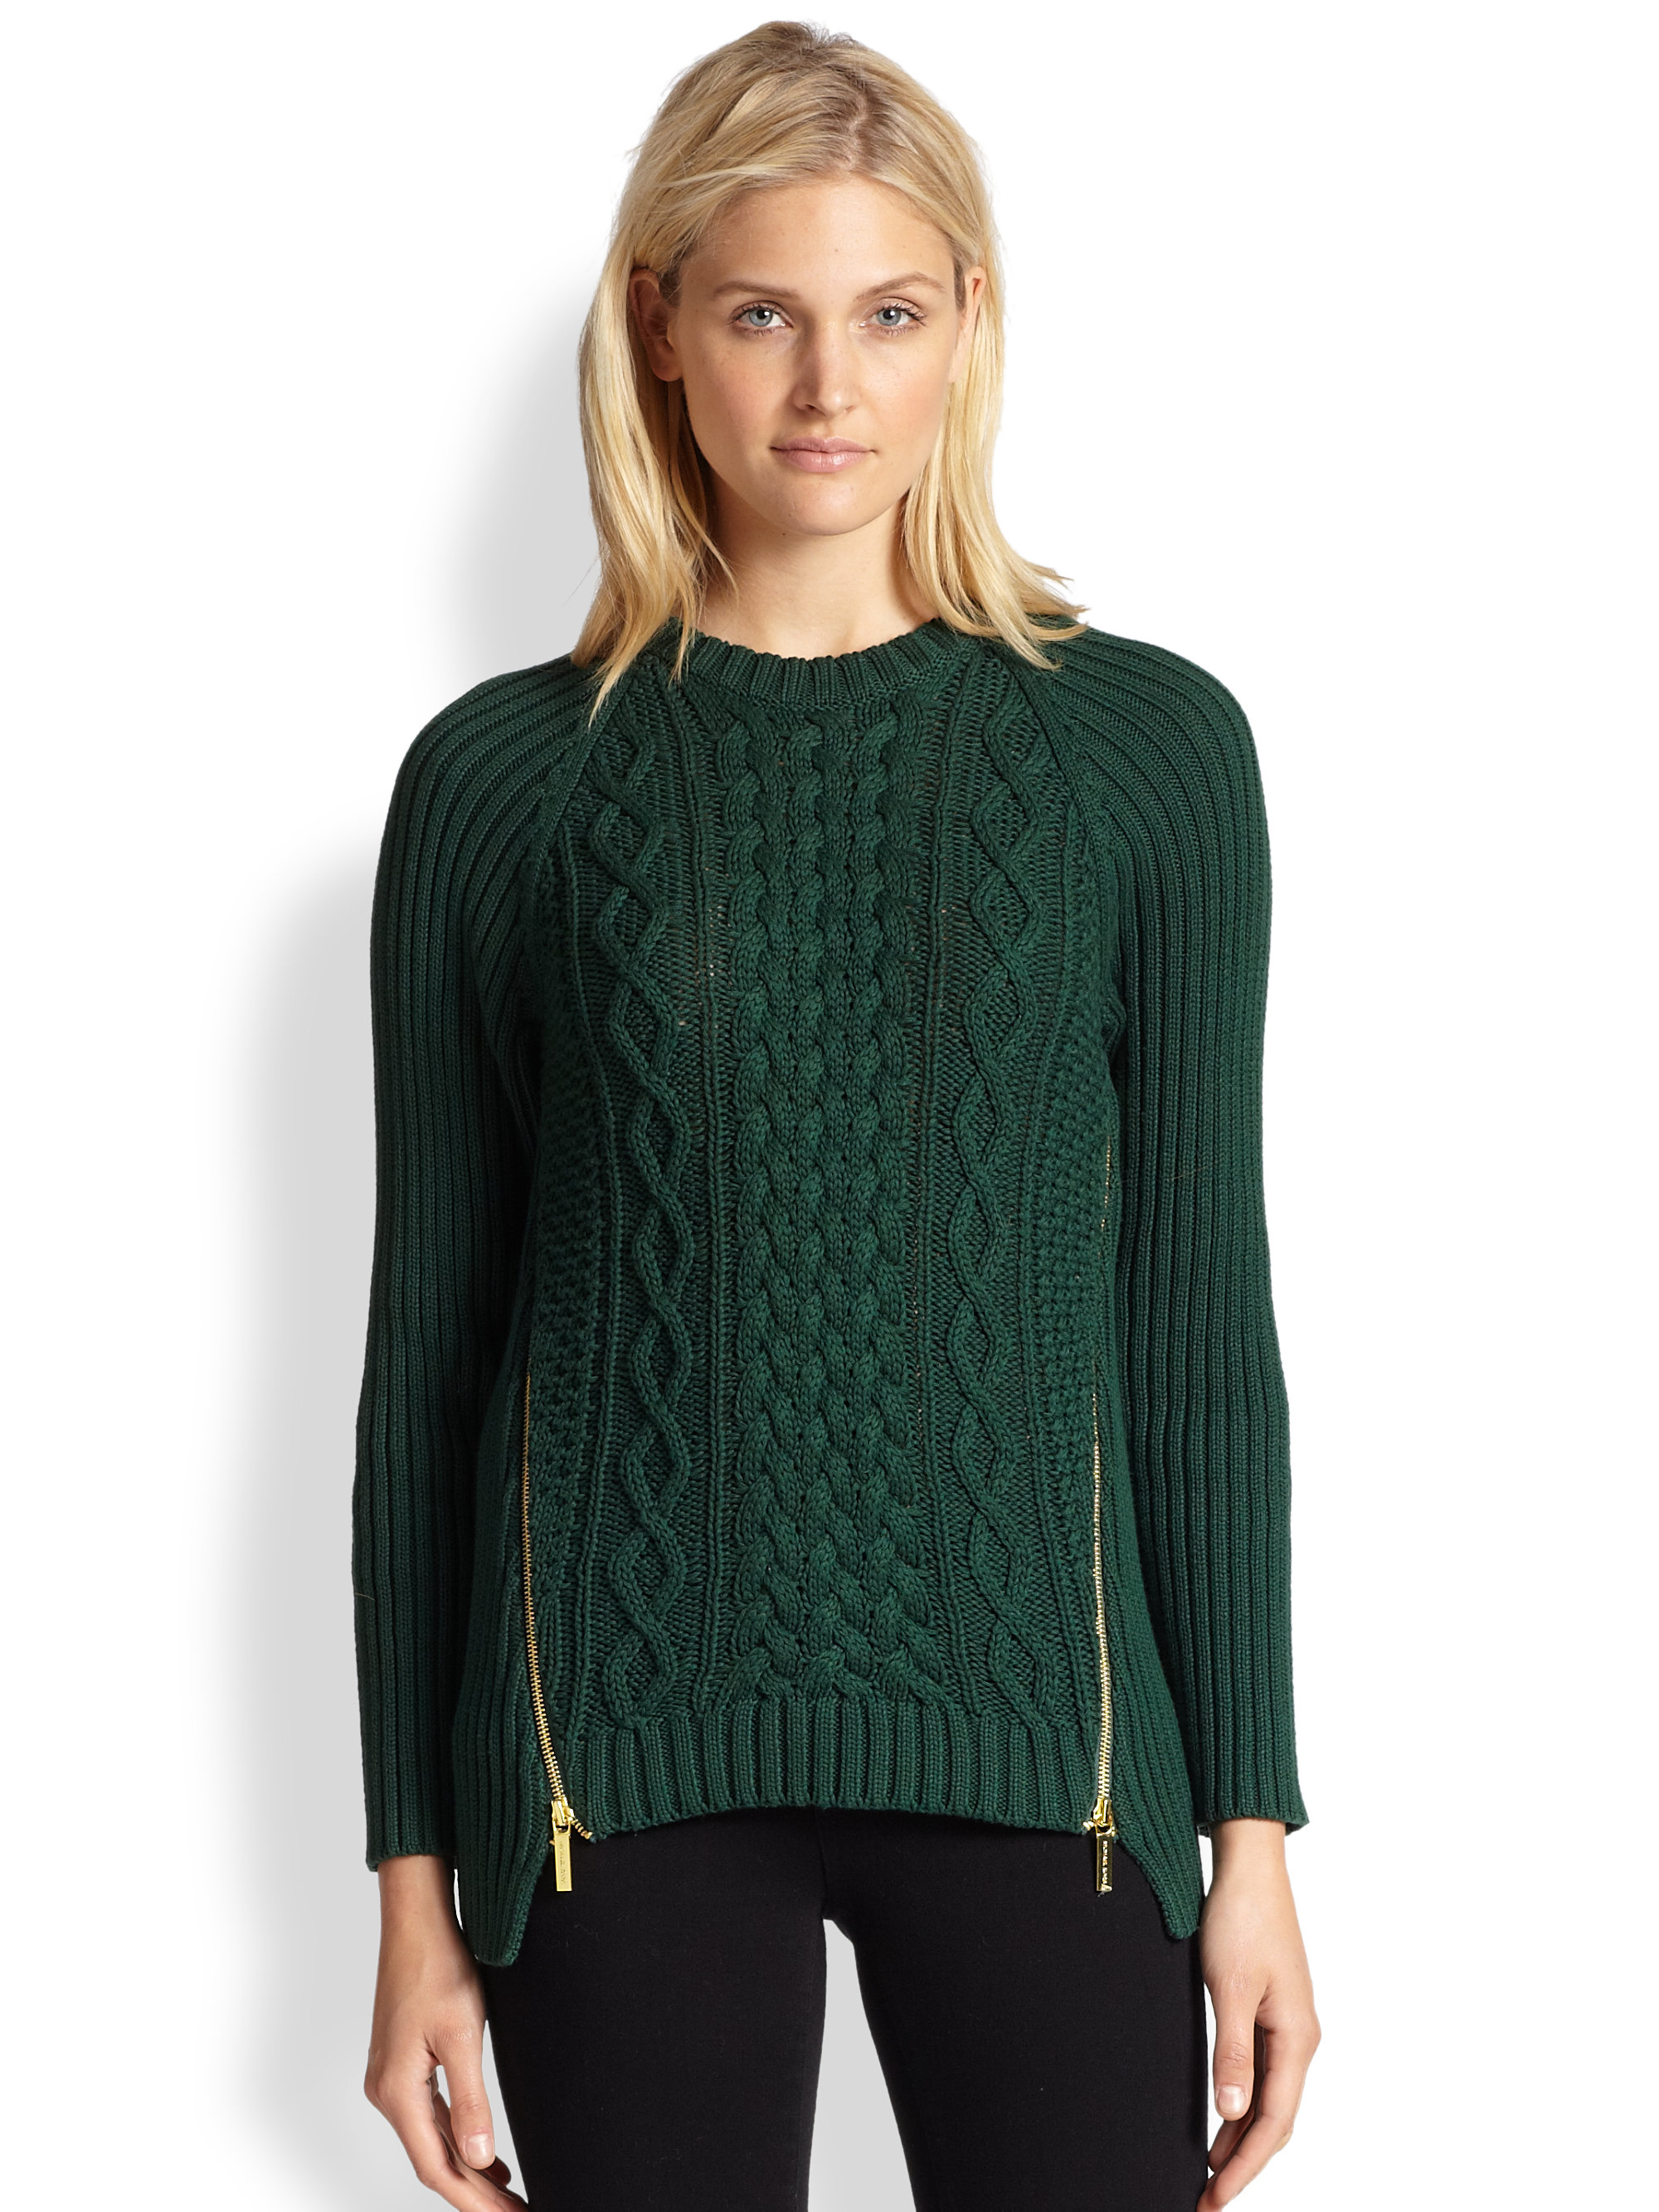 michael kors green sweater